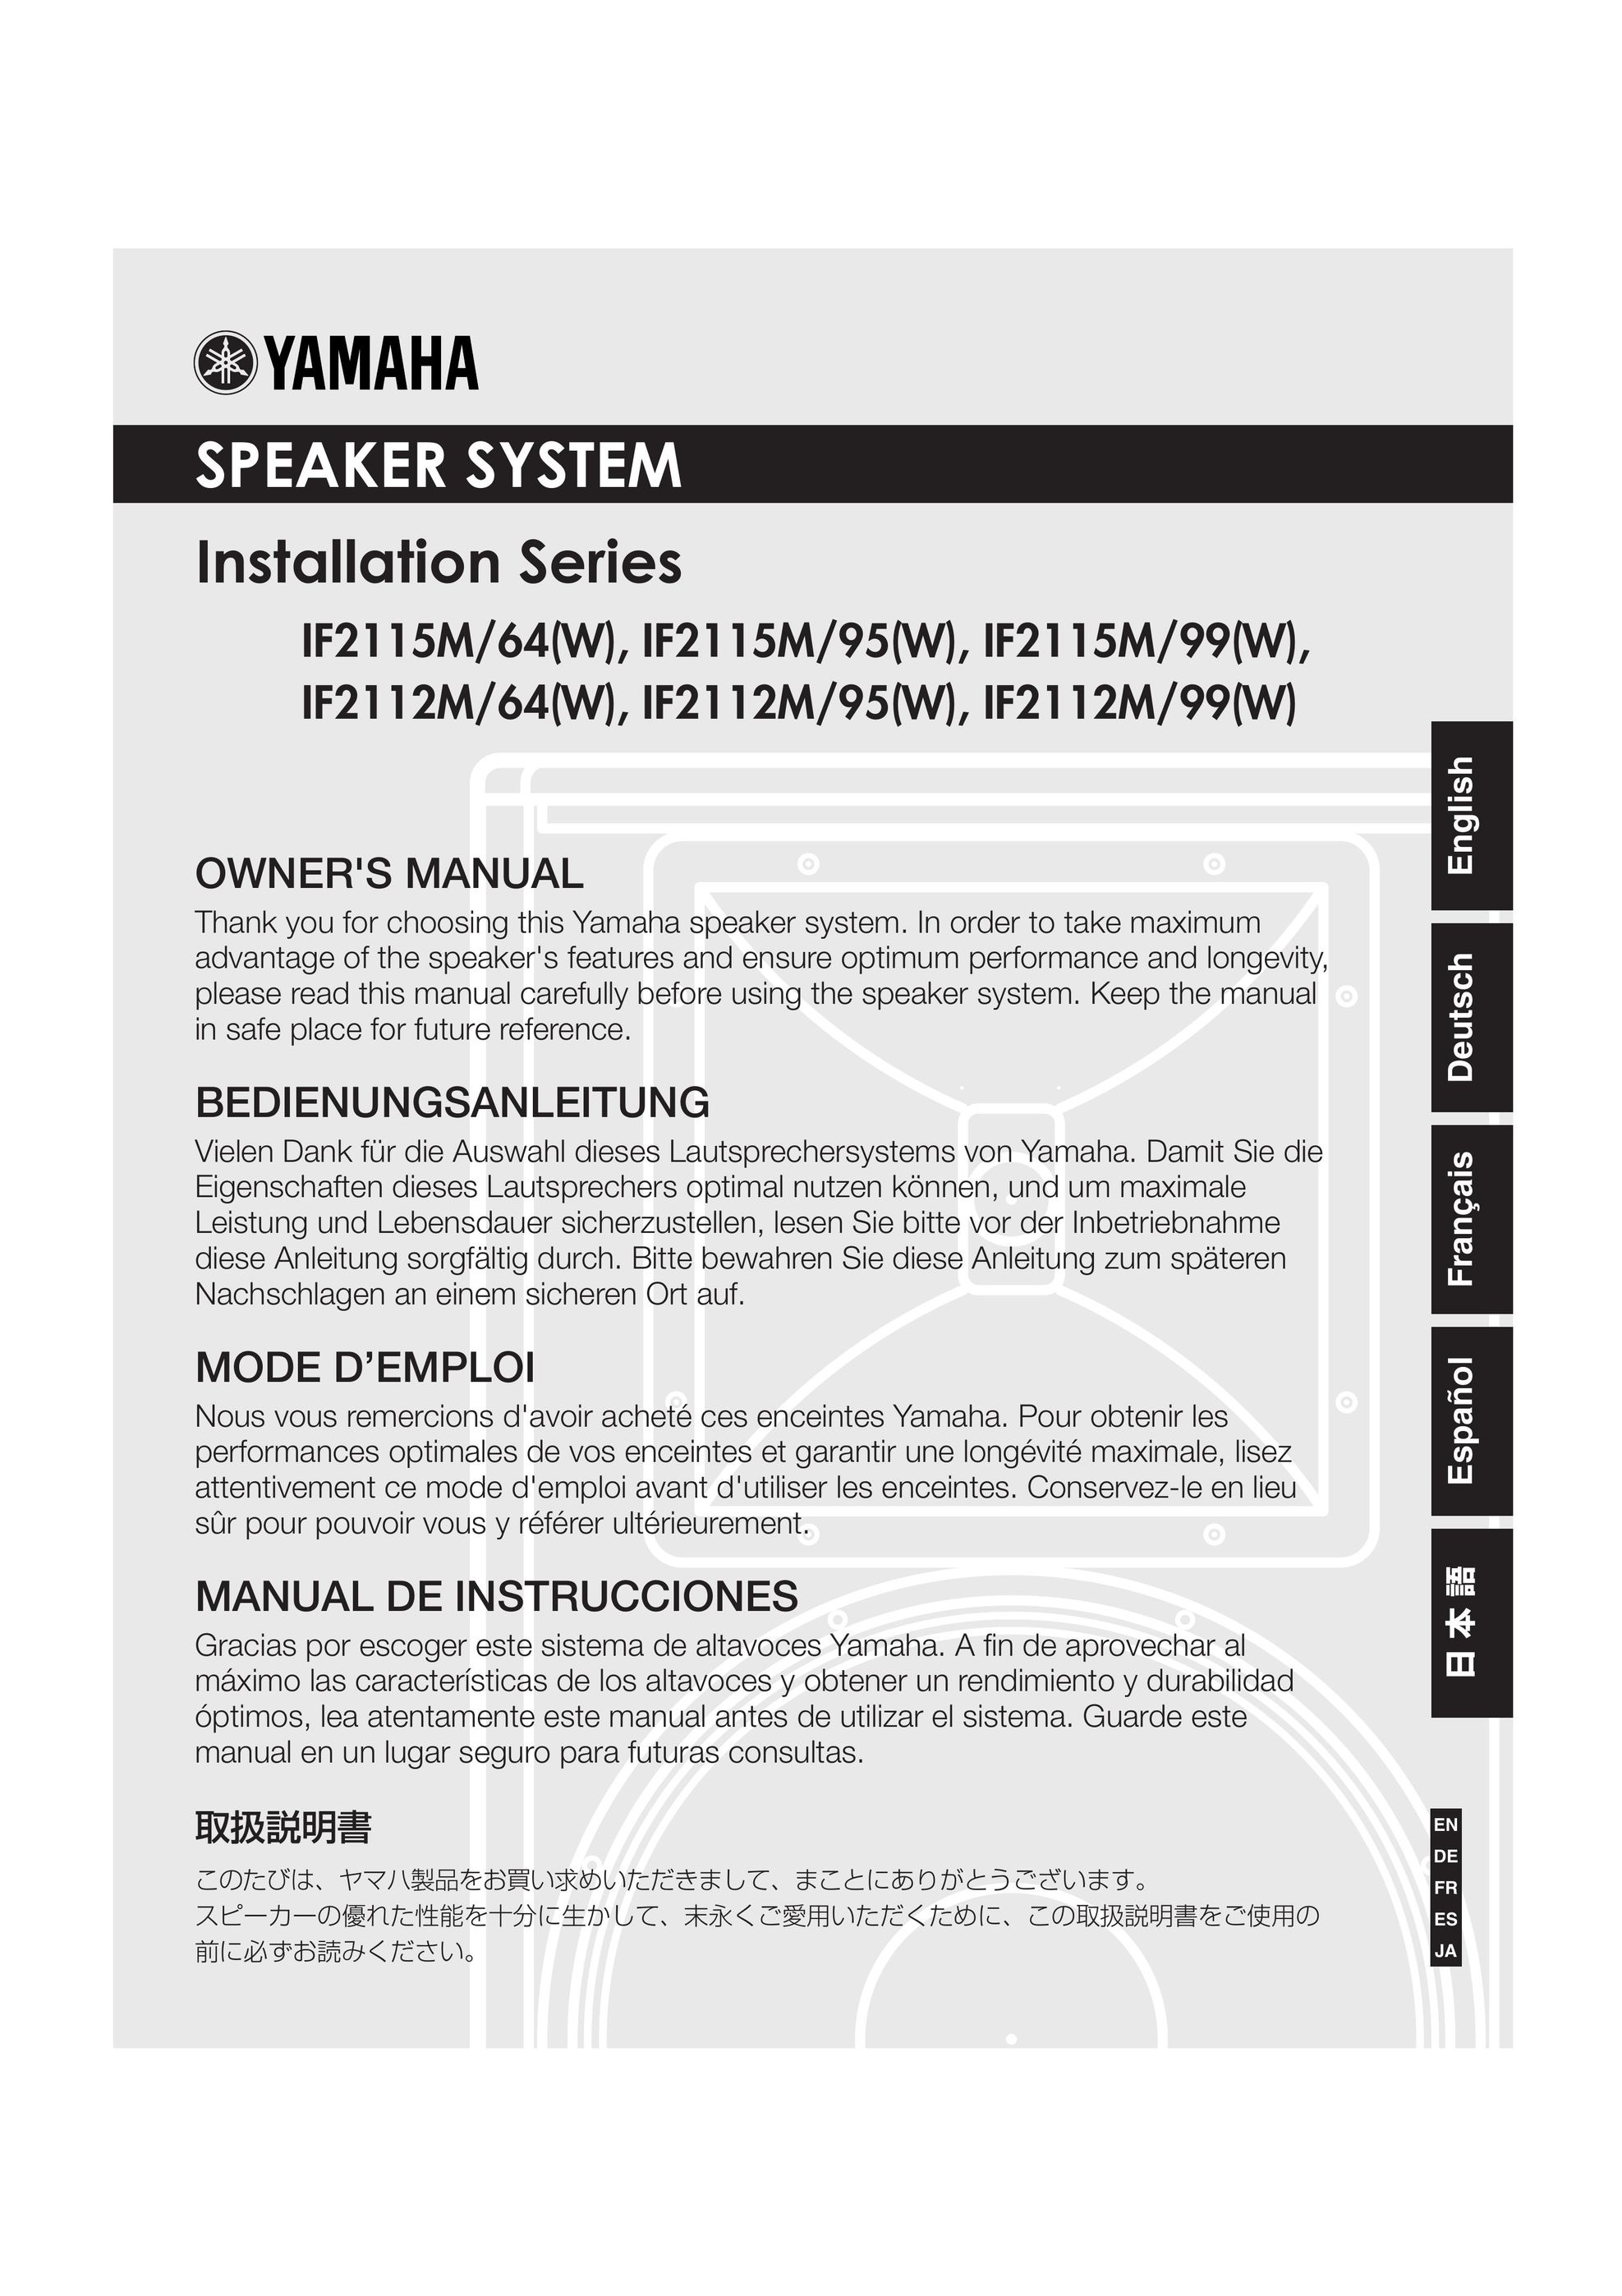 Yamaha IF2112M/64(W) Portable Speaker User Manual